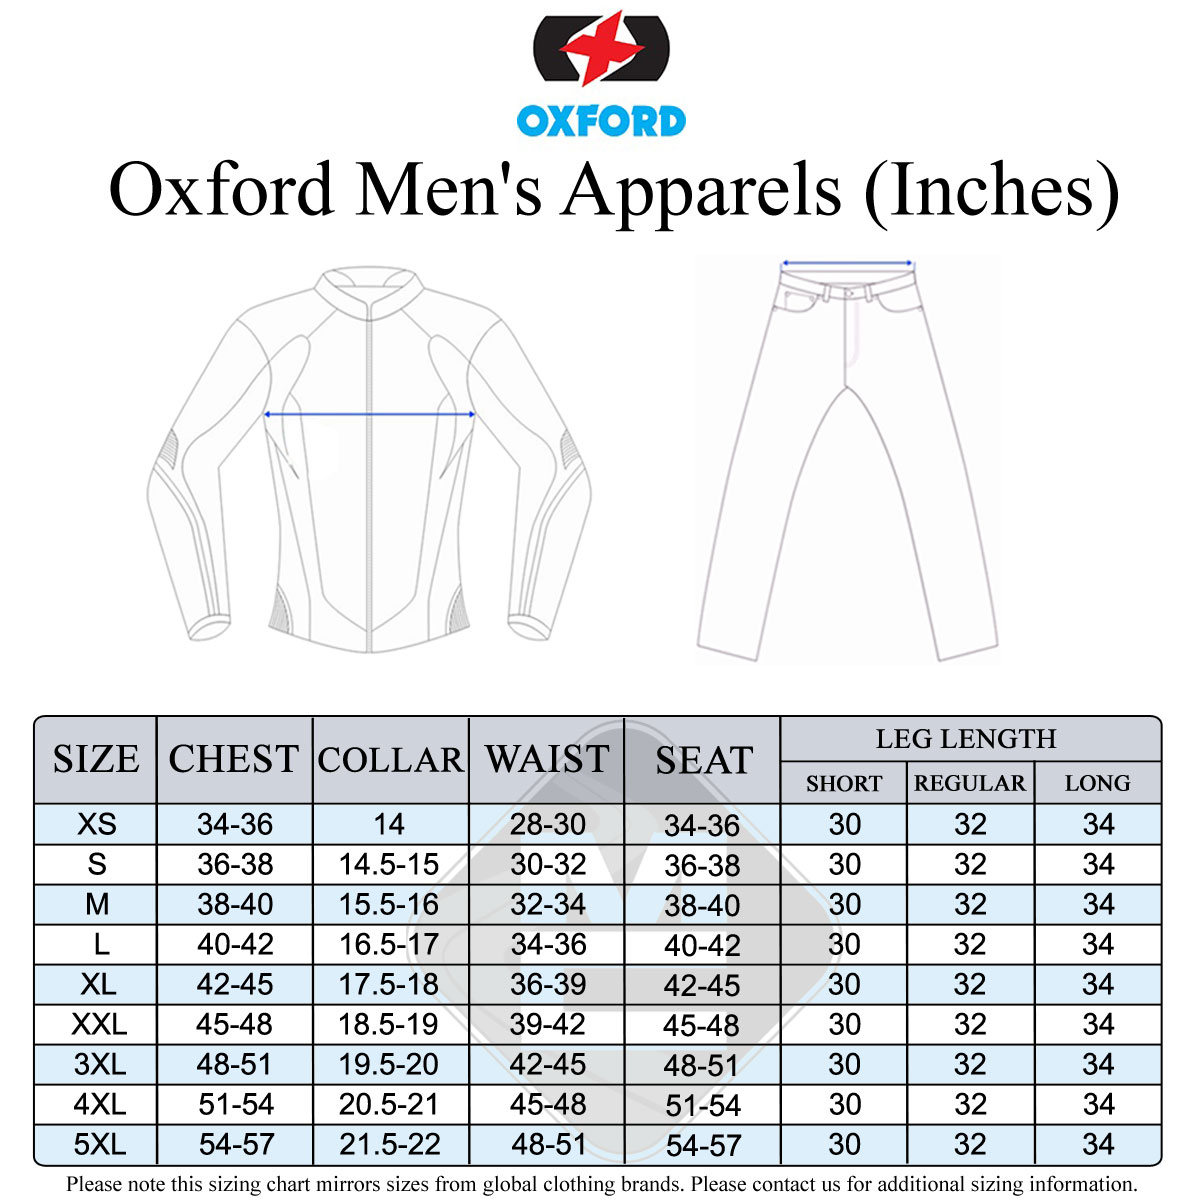 Oxford Men's Size Guide